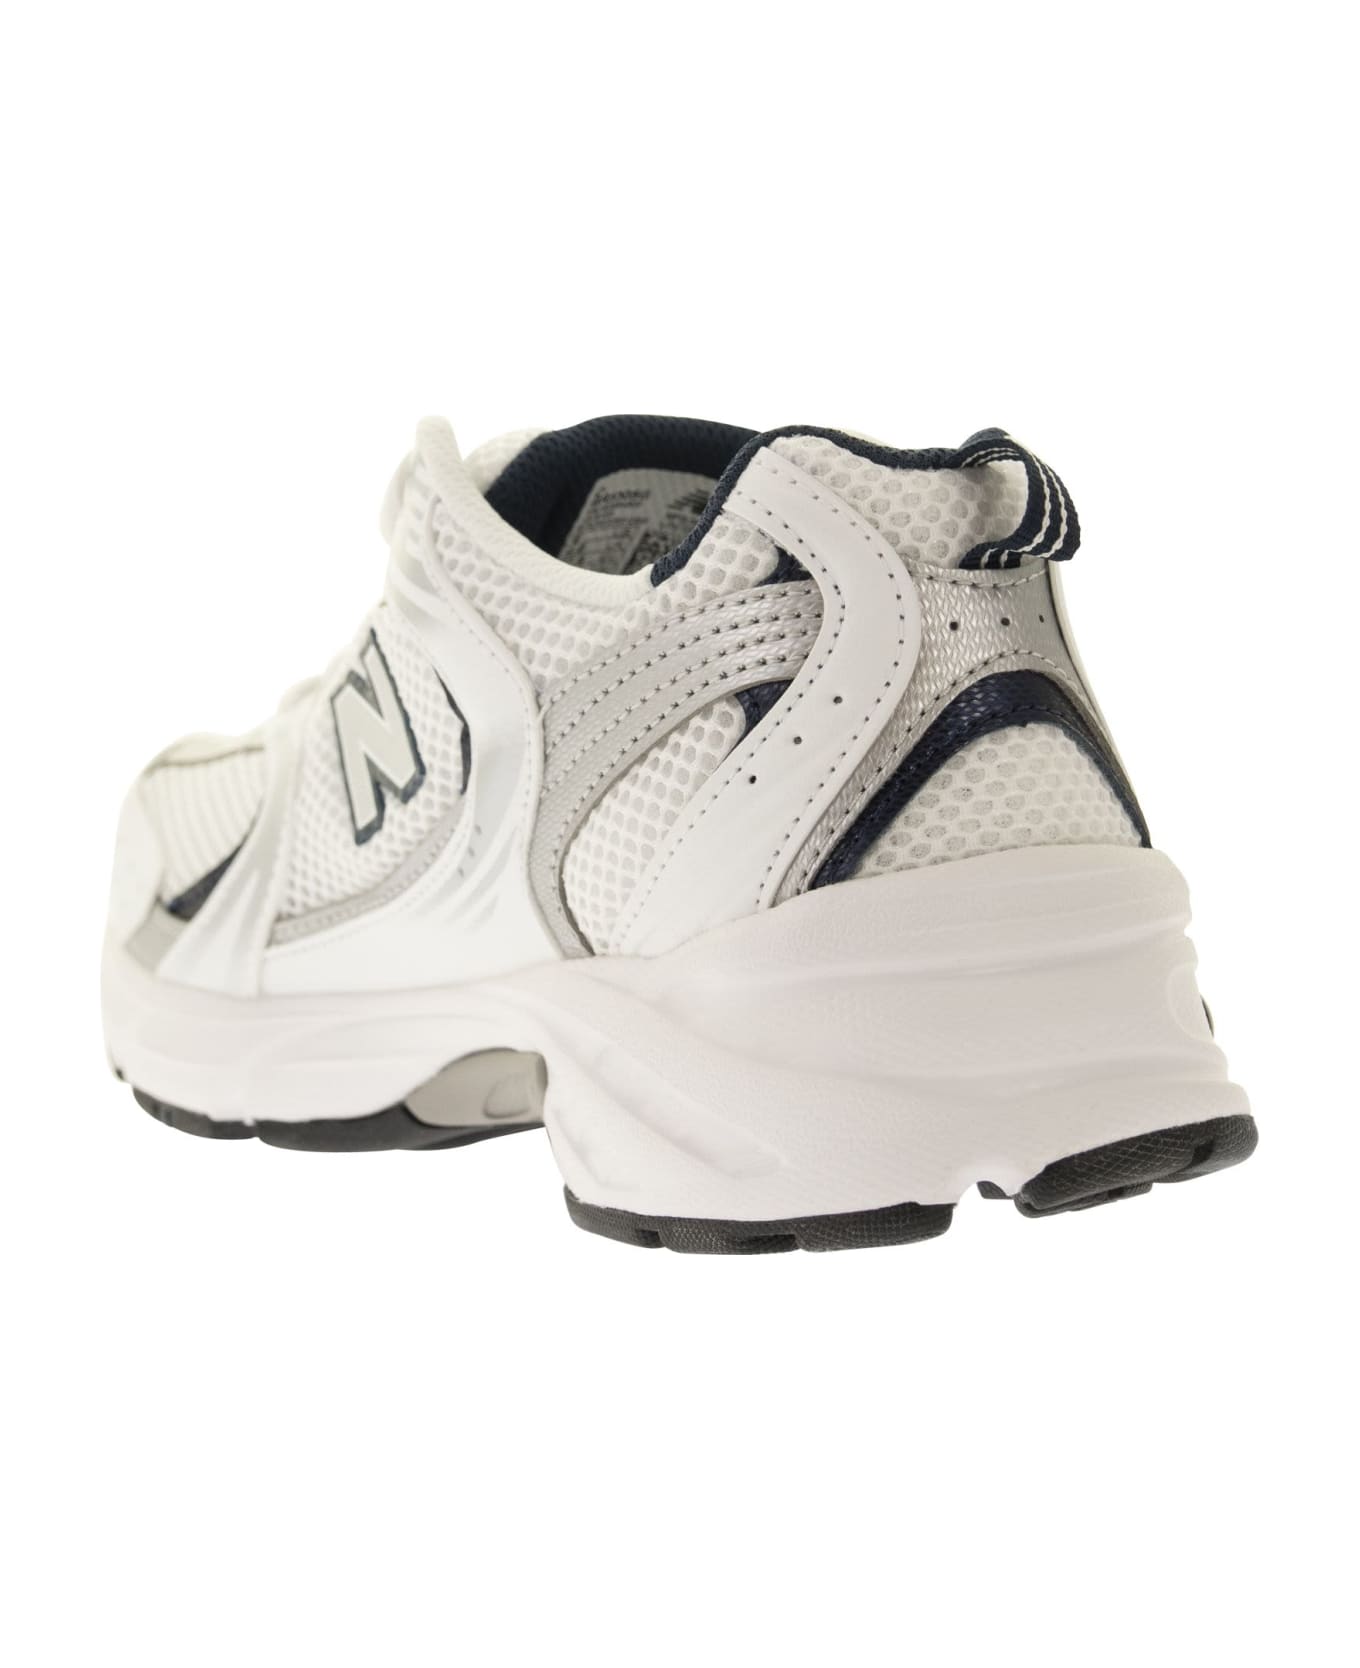 New Balance 530 - Sneakers Lifestyle - White